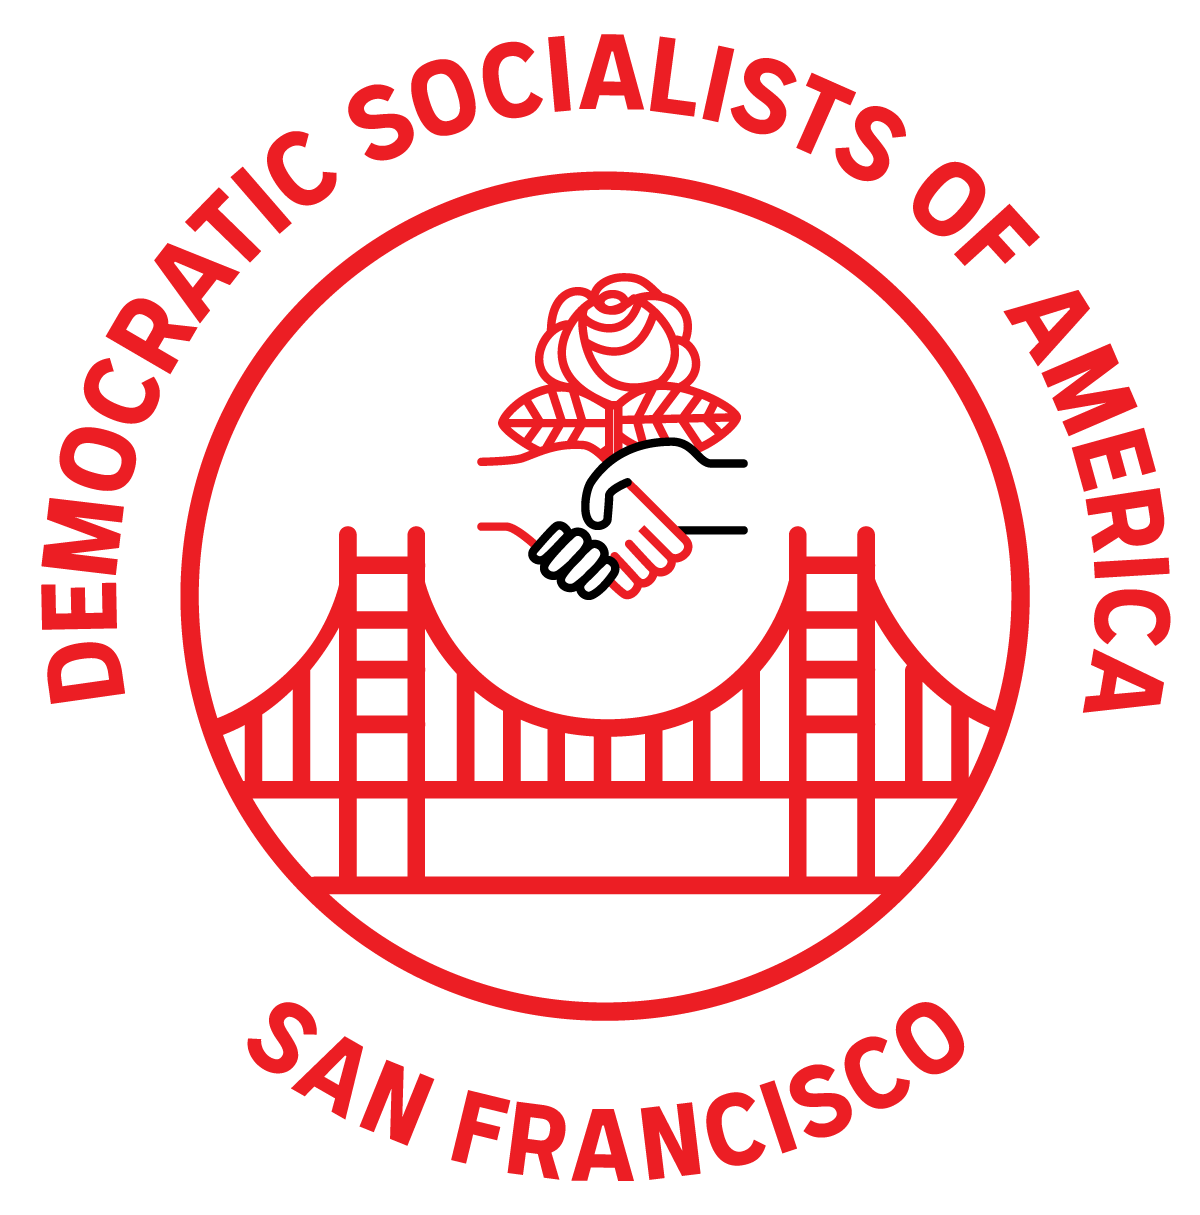 Democratic Socialists of America San Francisco